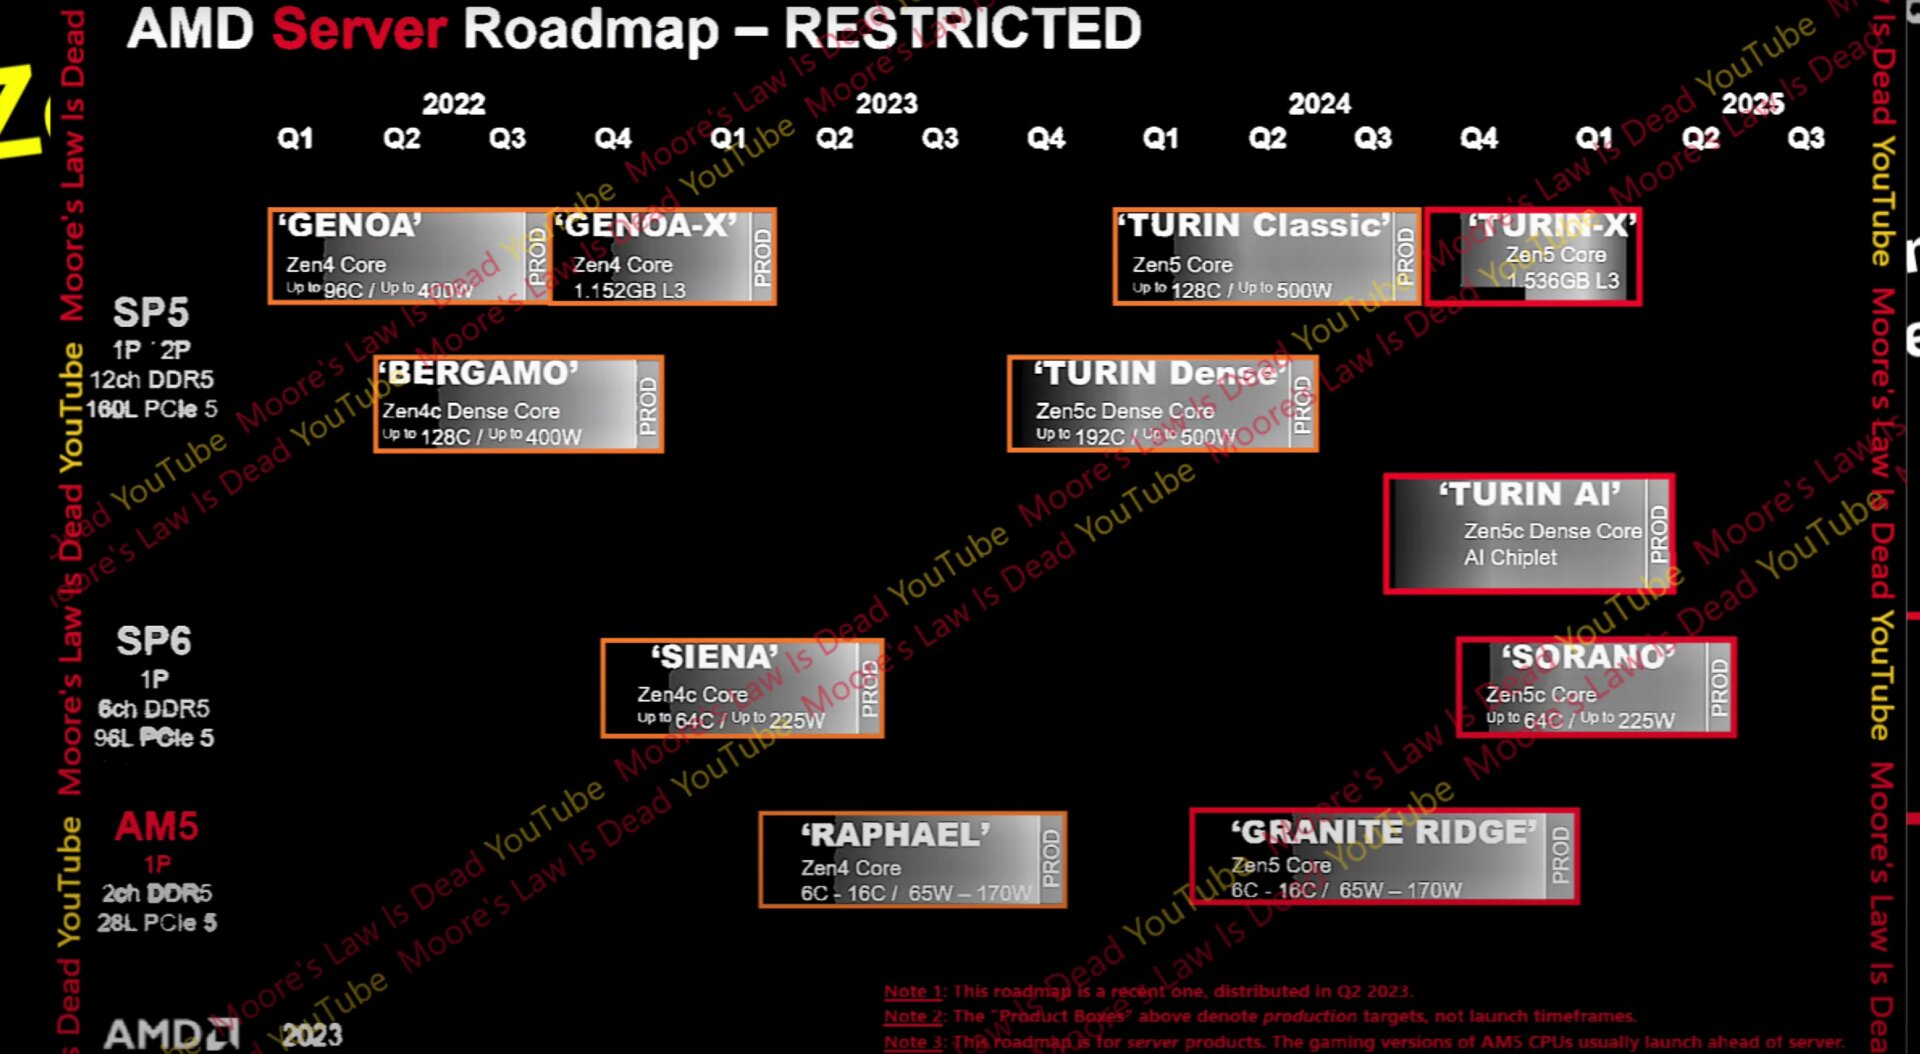 Previous unofficial Epyc roadmap with Zen 5